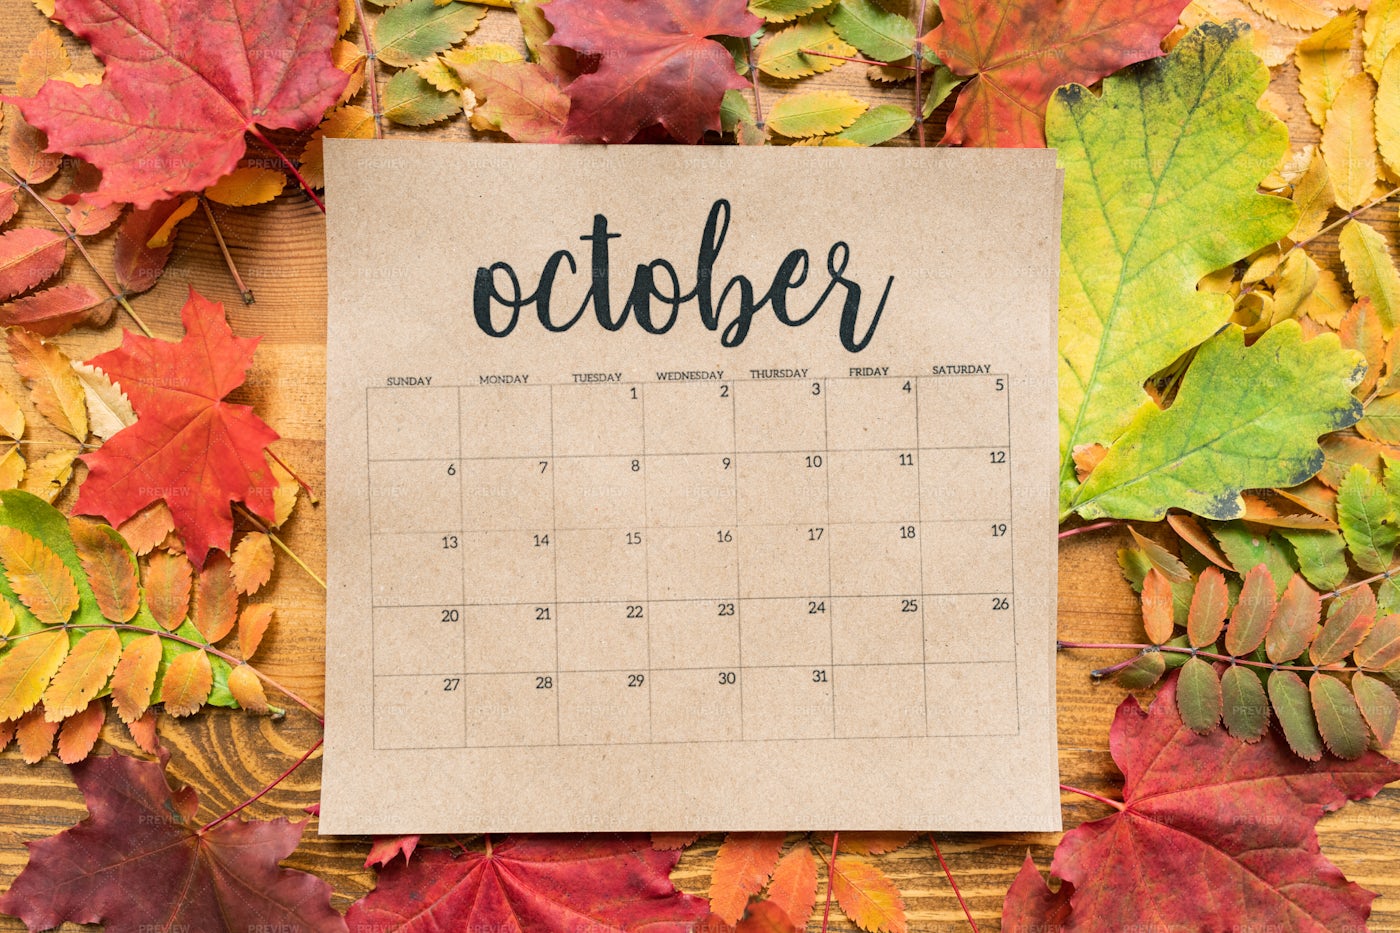 Overview Of October Calendar Sheet... Stock Photos Motion Array